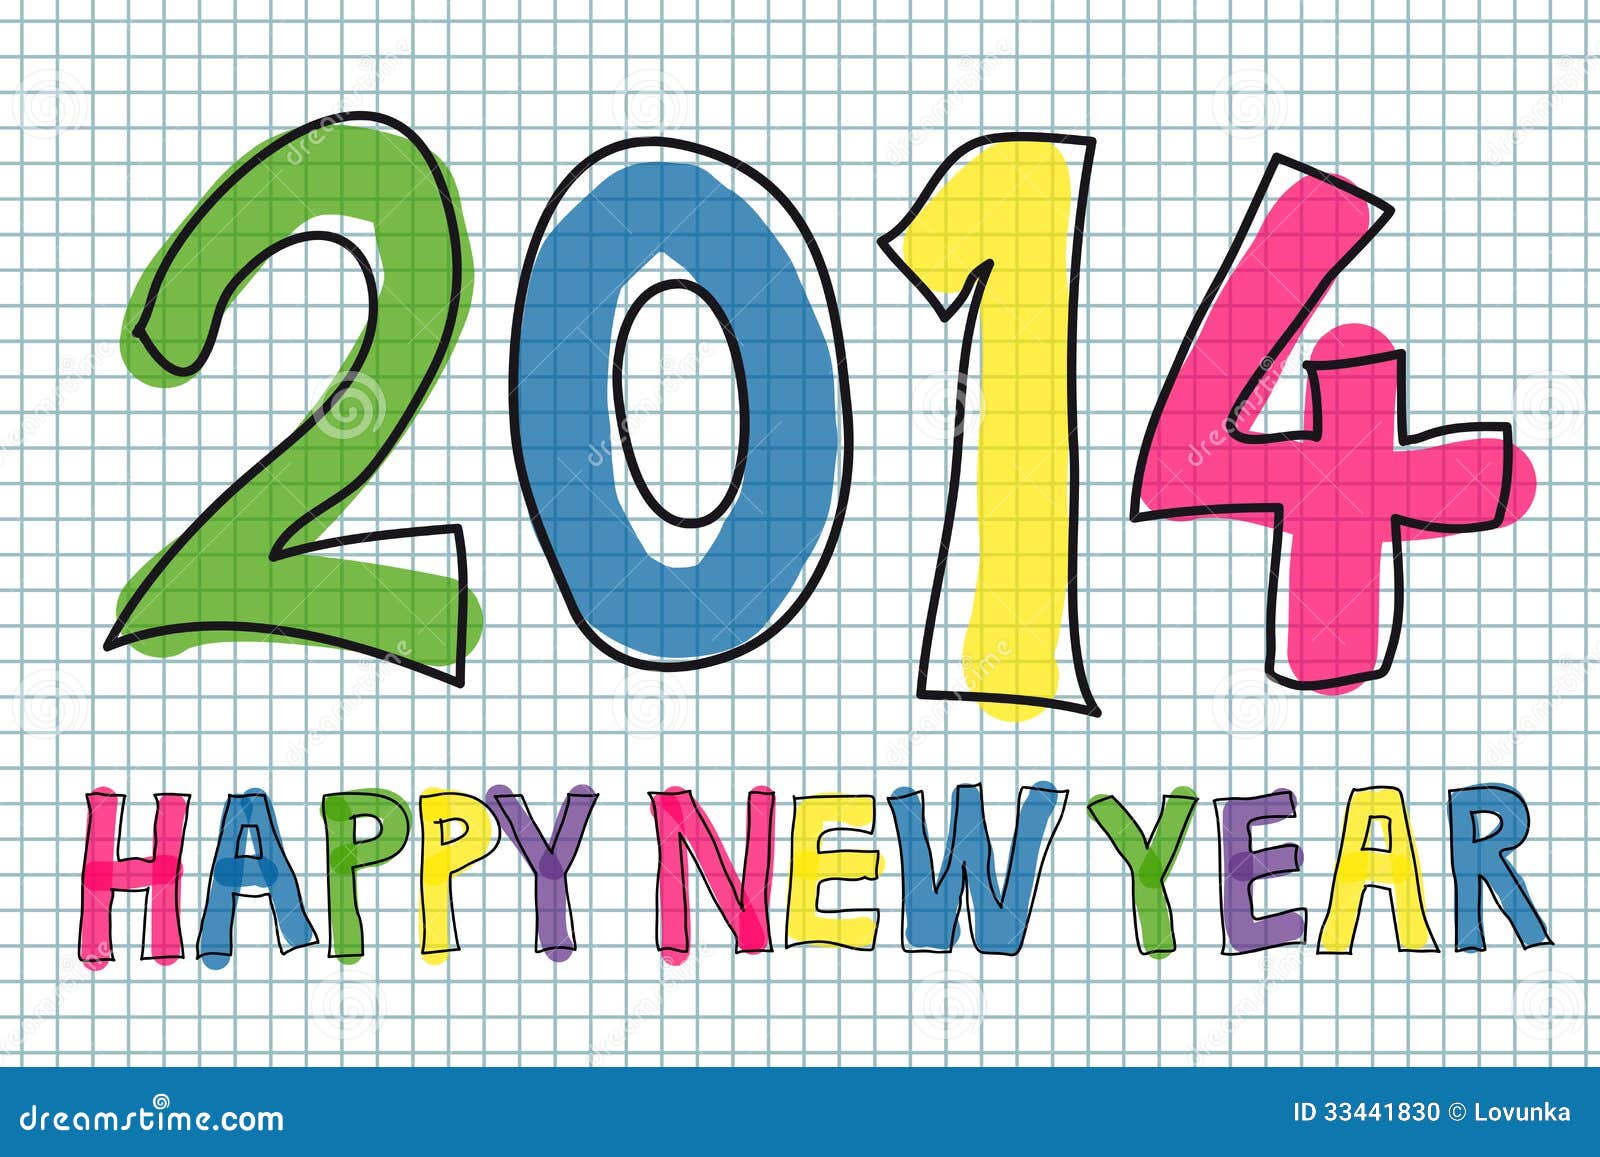 happy new year 2014 clipart animated - photo #37